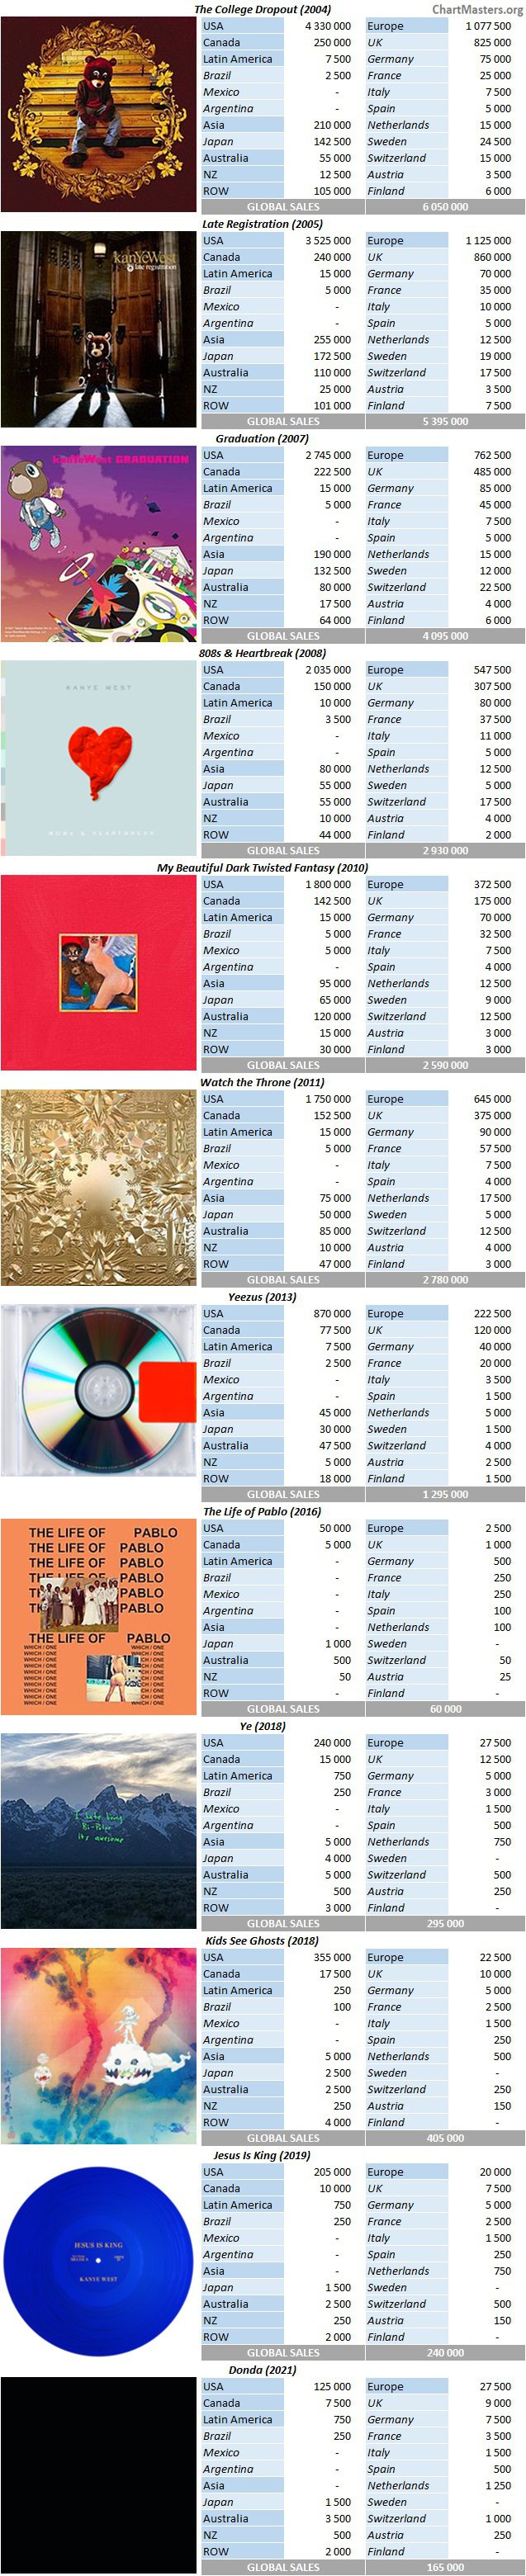 CSPC Kanye West album sales full breakdown